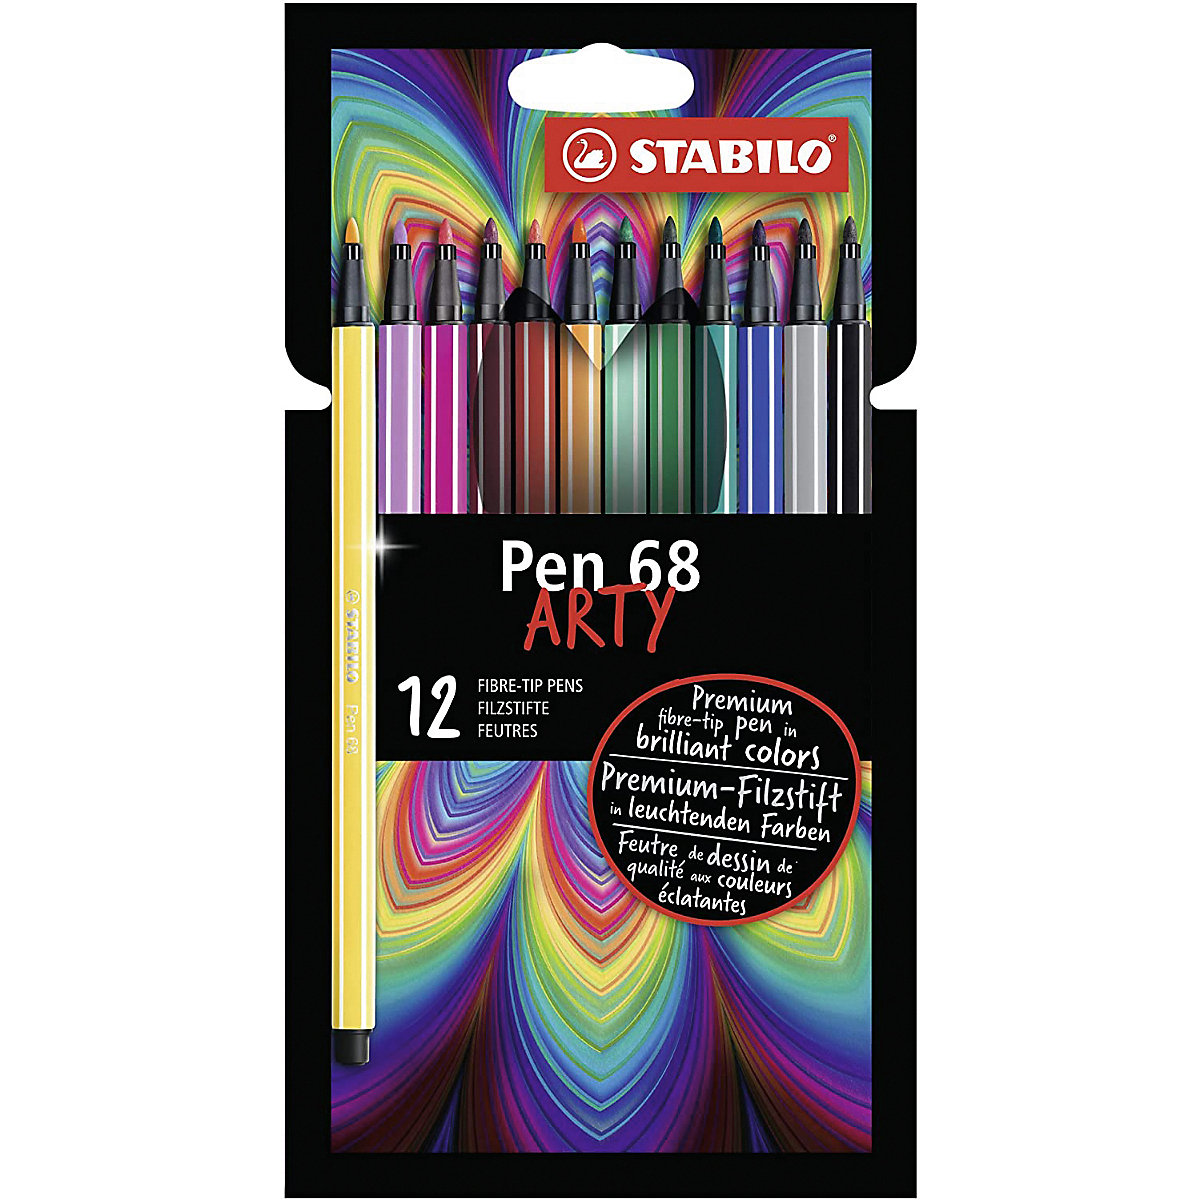 Premium-Filzstifte Pen 68 ARTY 12 Farben